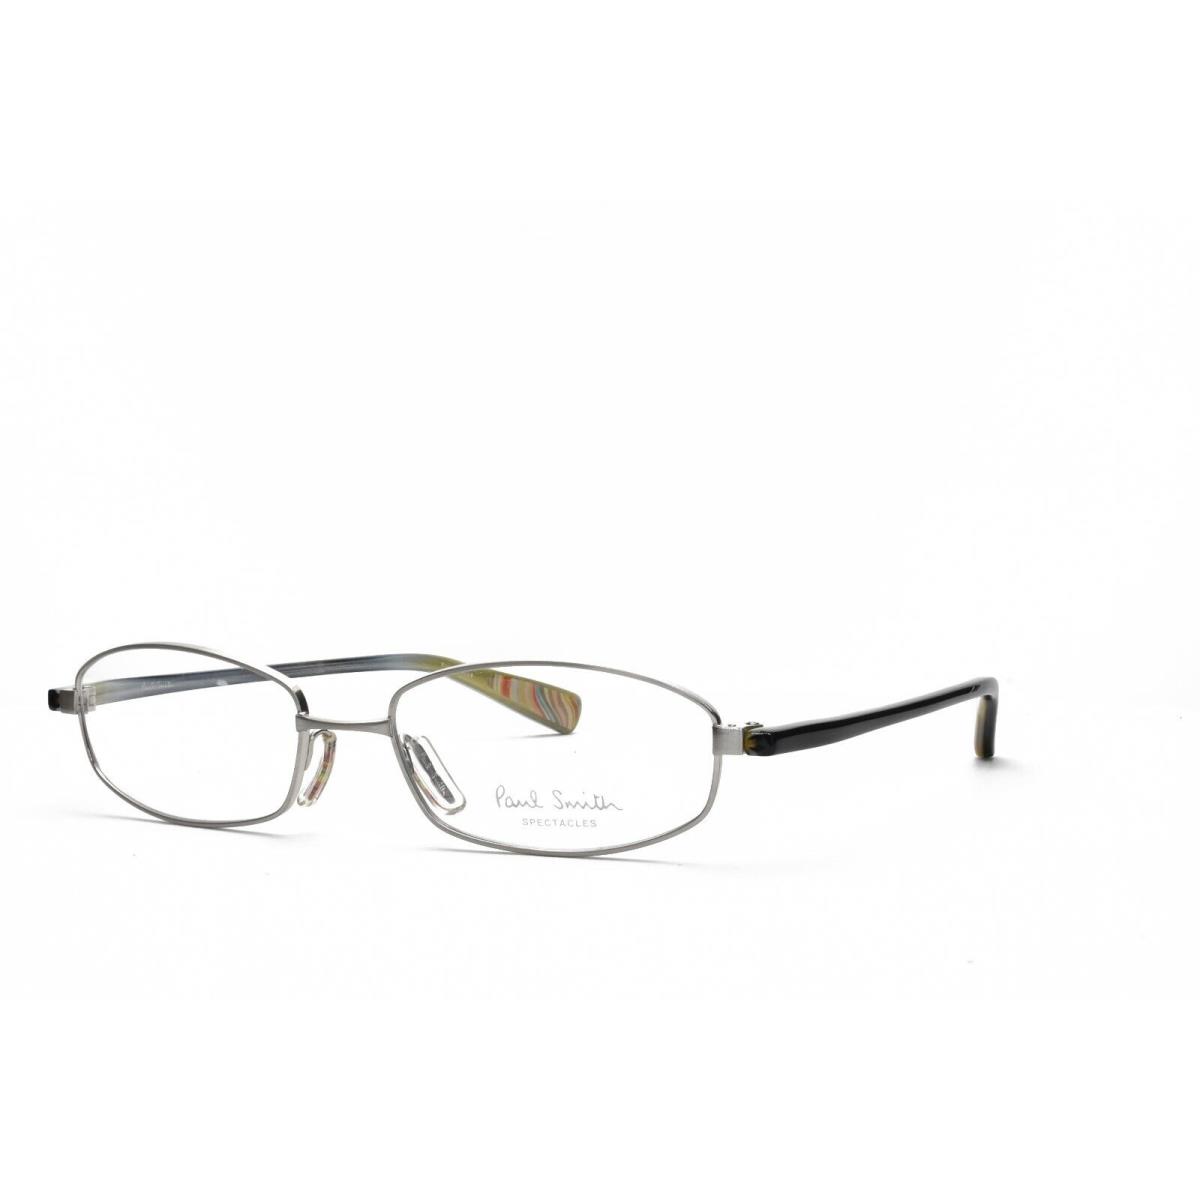 Paul Smith PS 194 BP Eyeglasses Frames Only 51-16-140